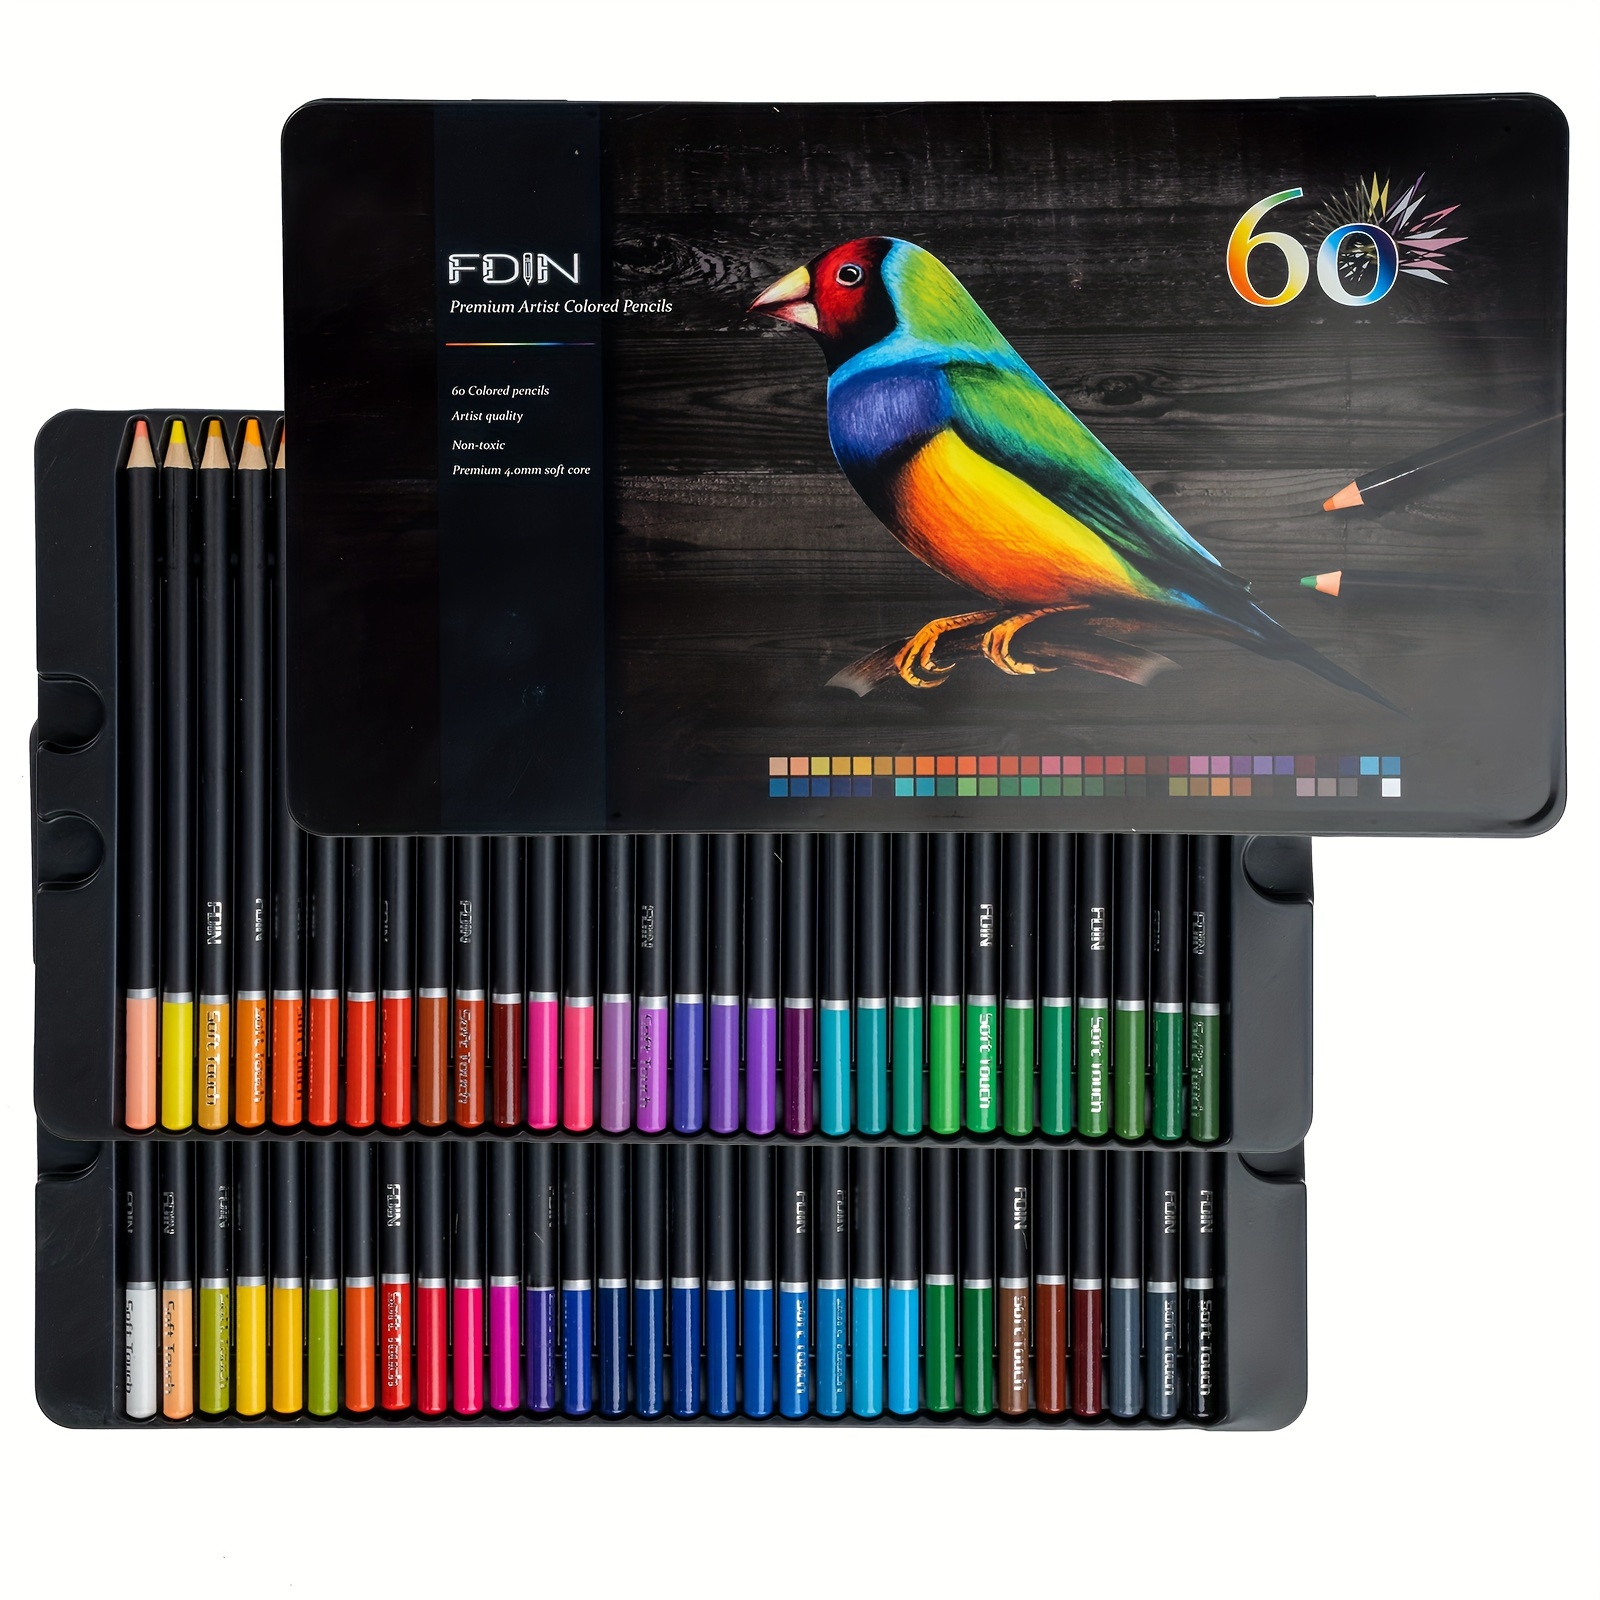 Tradineur - Caja de 12 lápices de colores - Forma hexagonal - Material  escolar - Colores vivos - Ideal para colorear y dibujar.